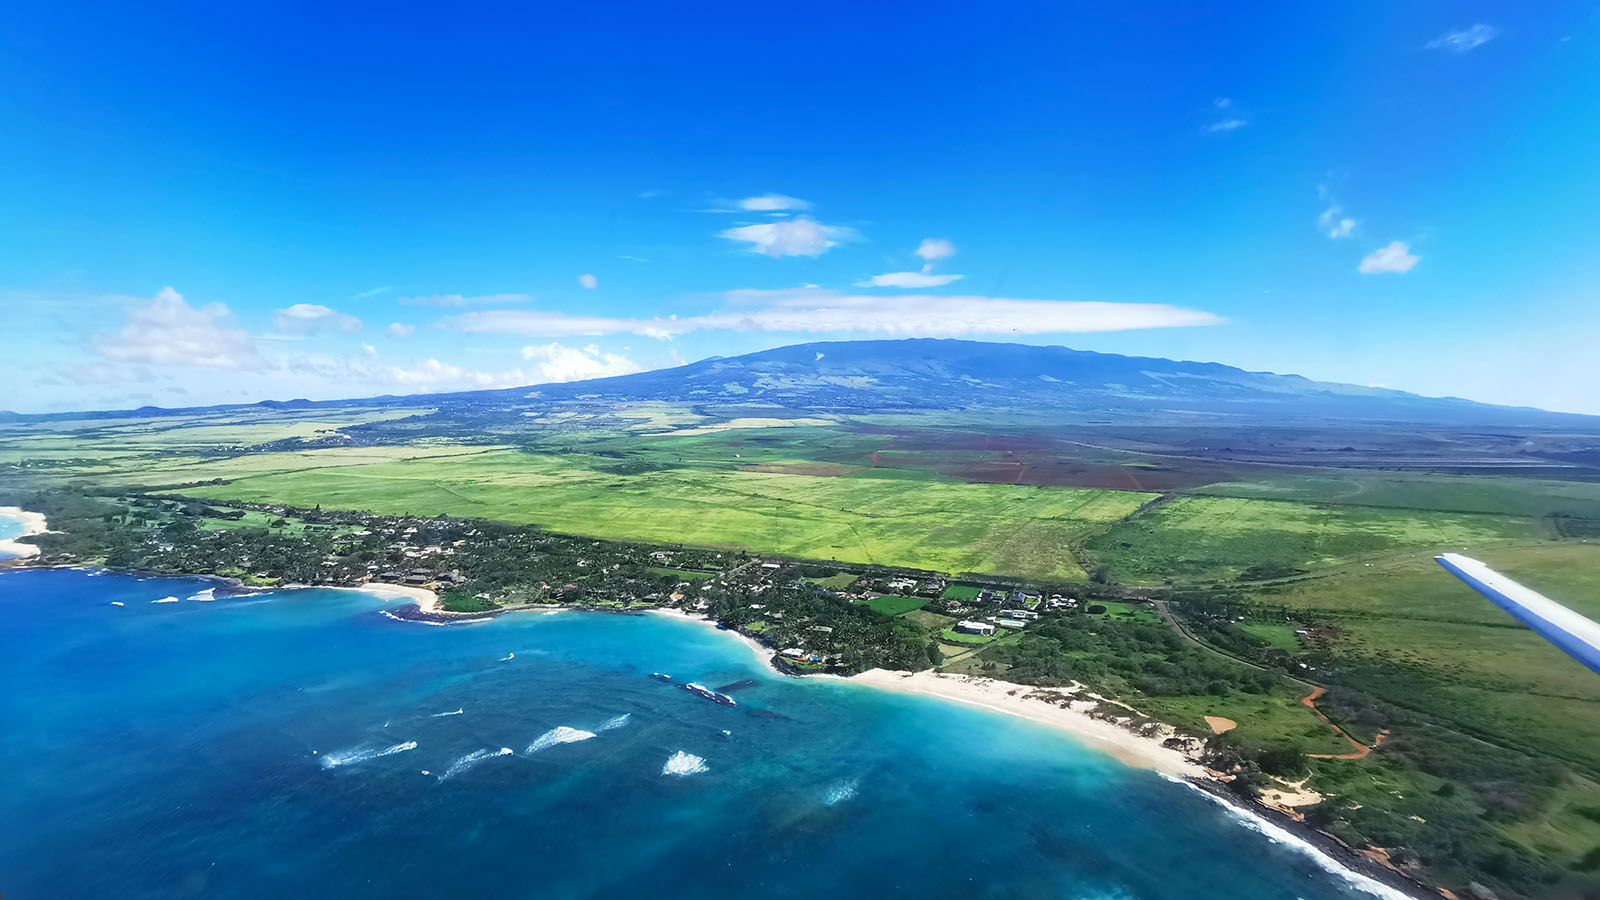 Maui from plane window